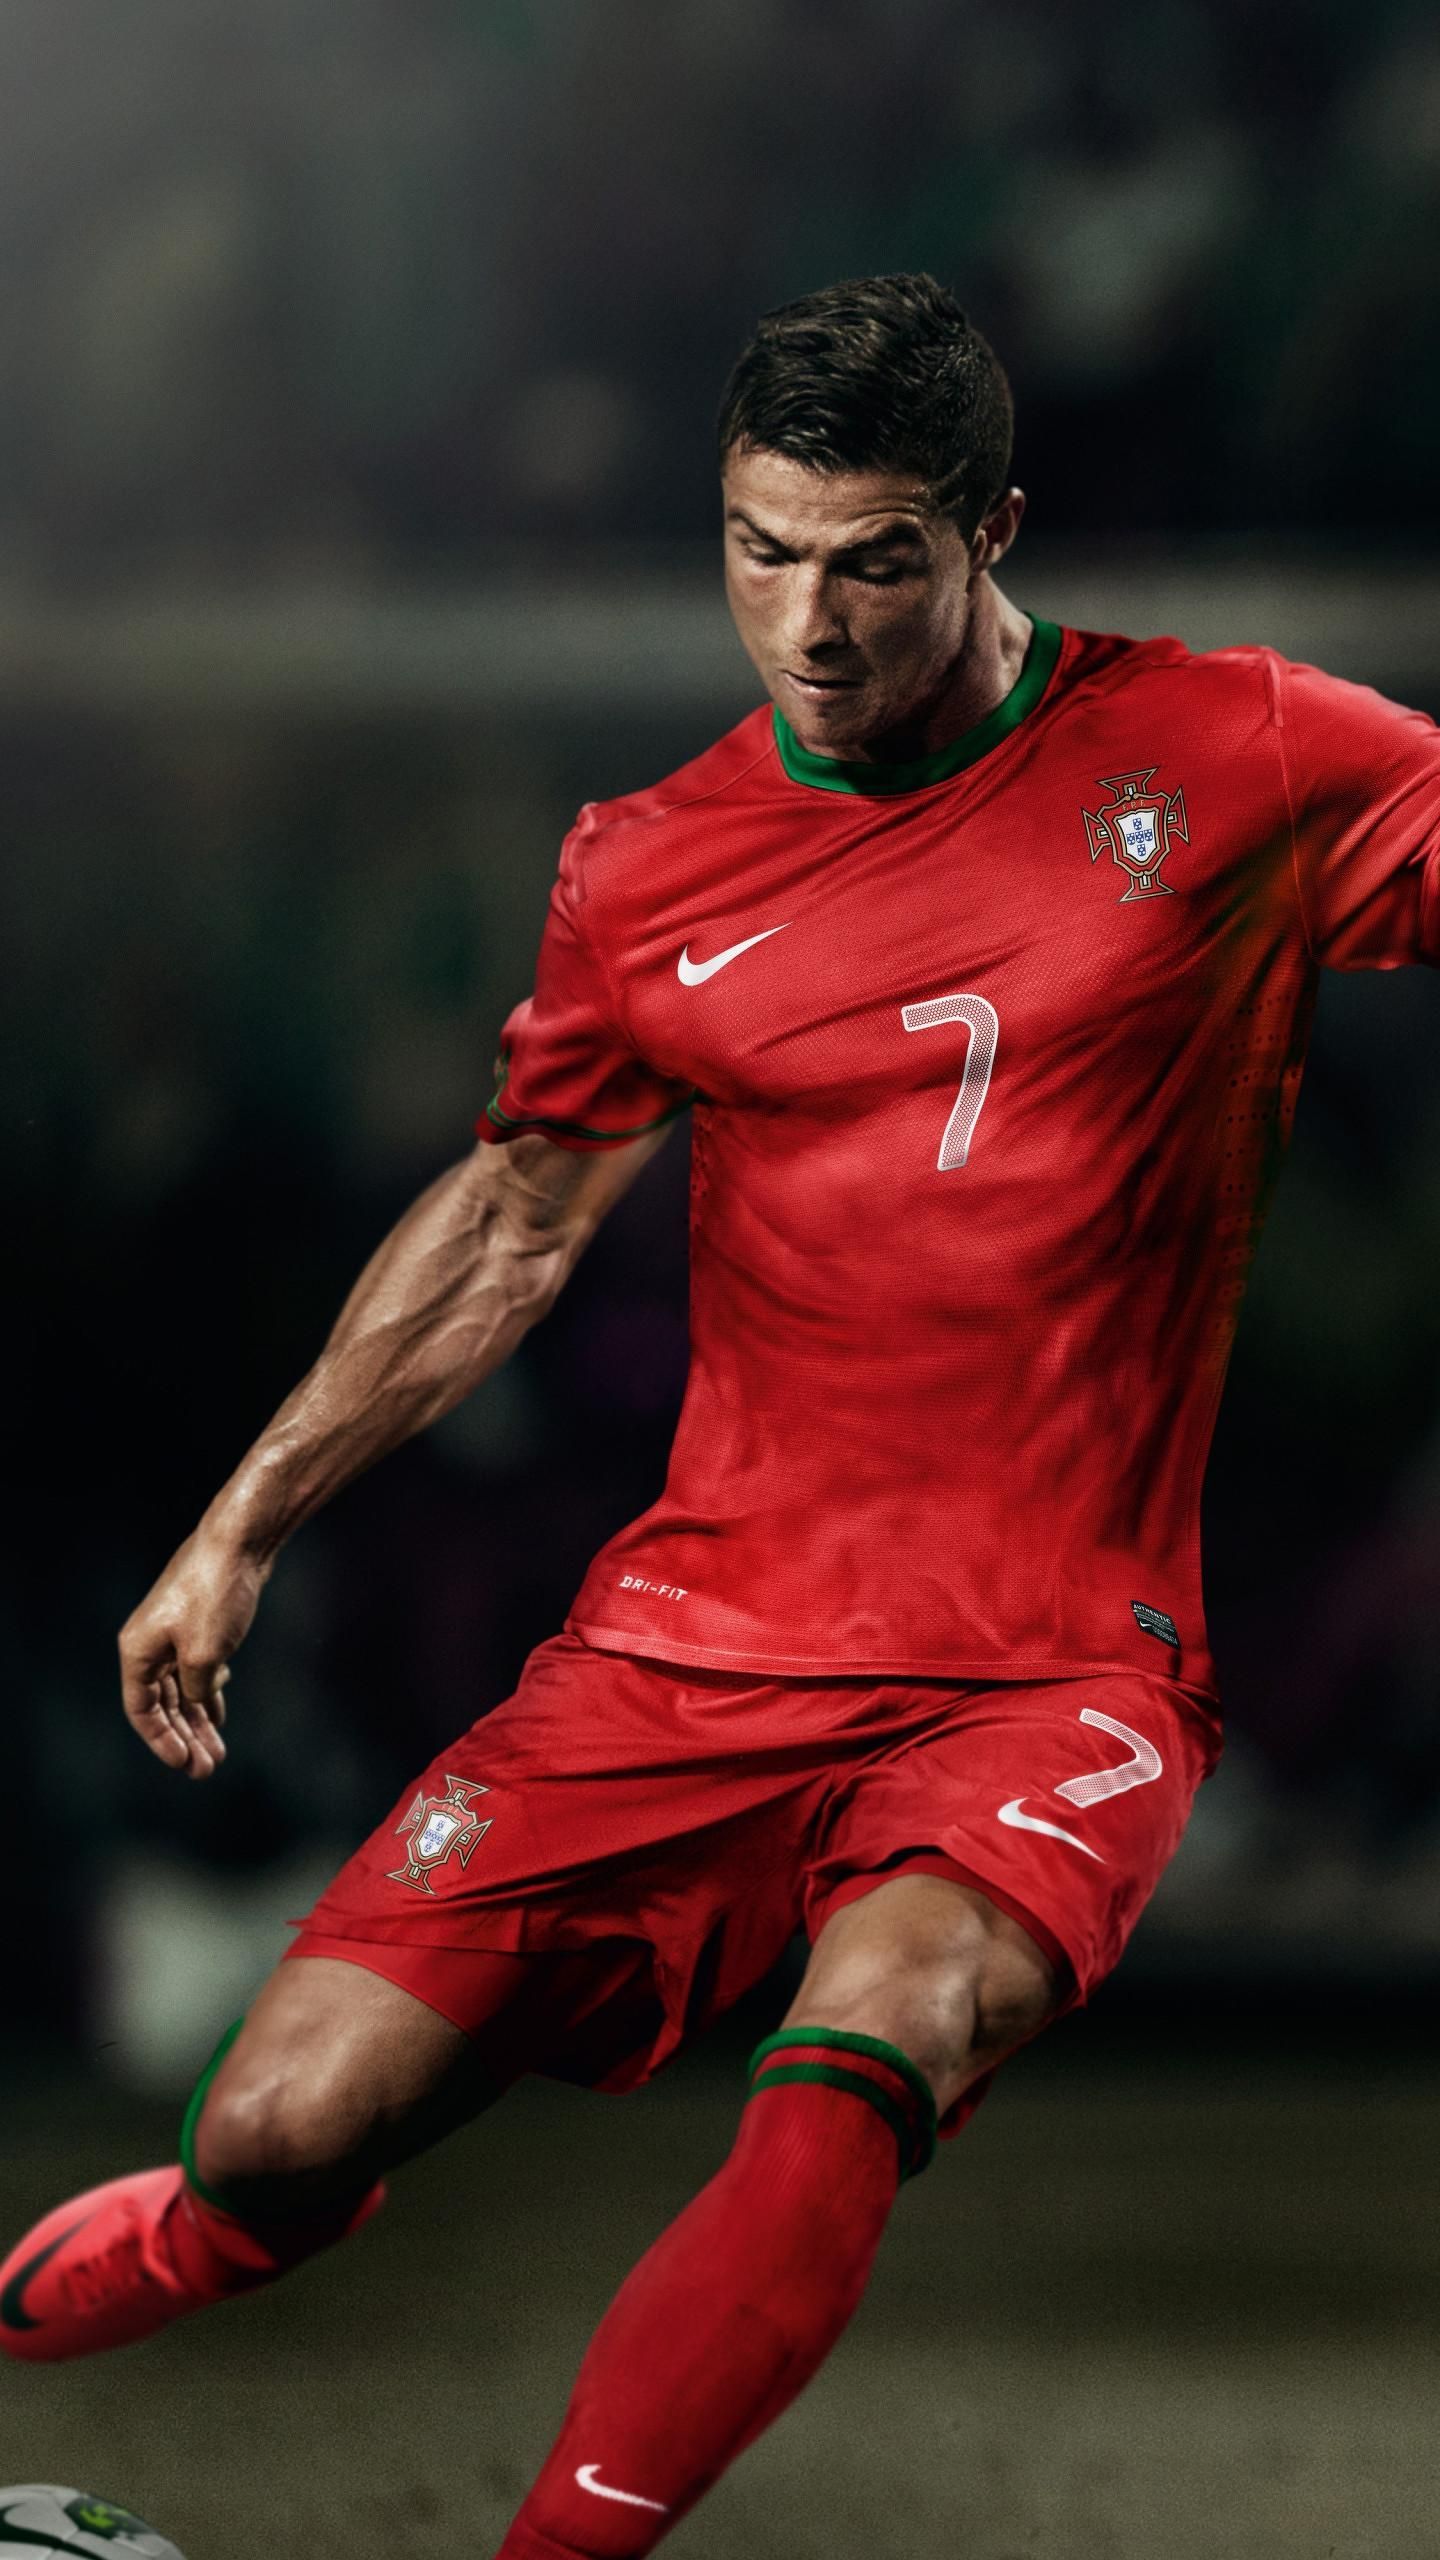 Cristiano Ronaldo Soccer Player 8K, HD Sports Wallpaper Photo